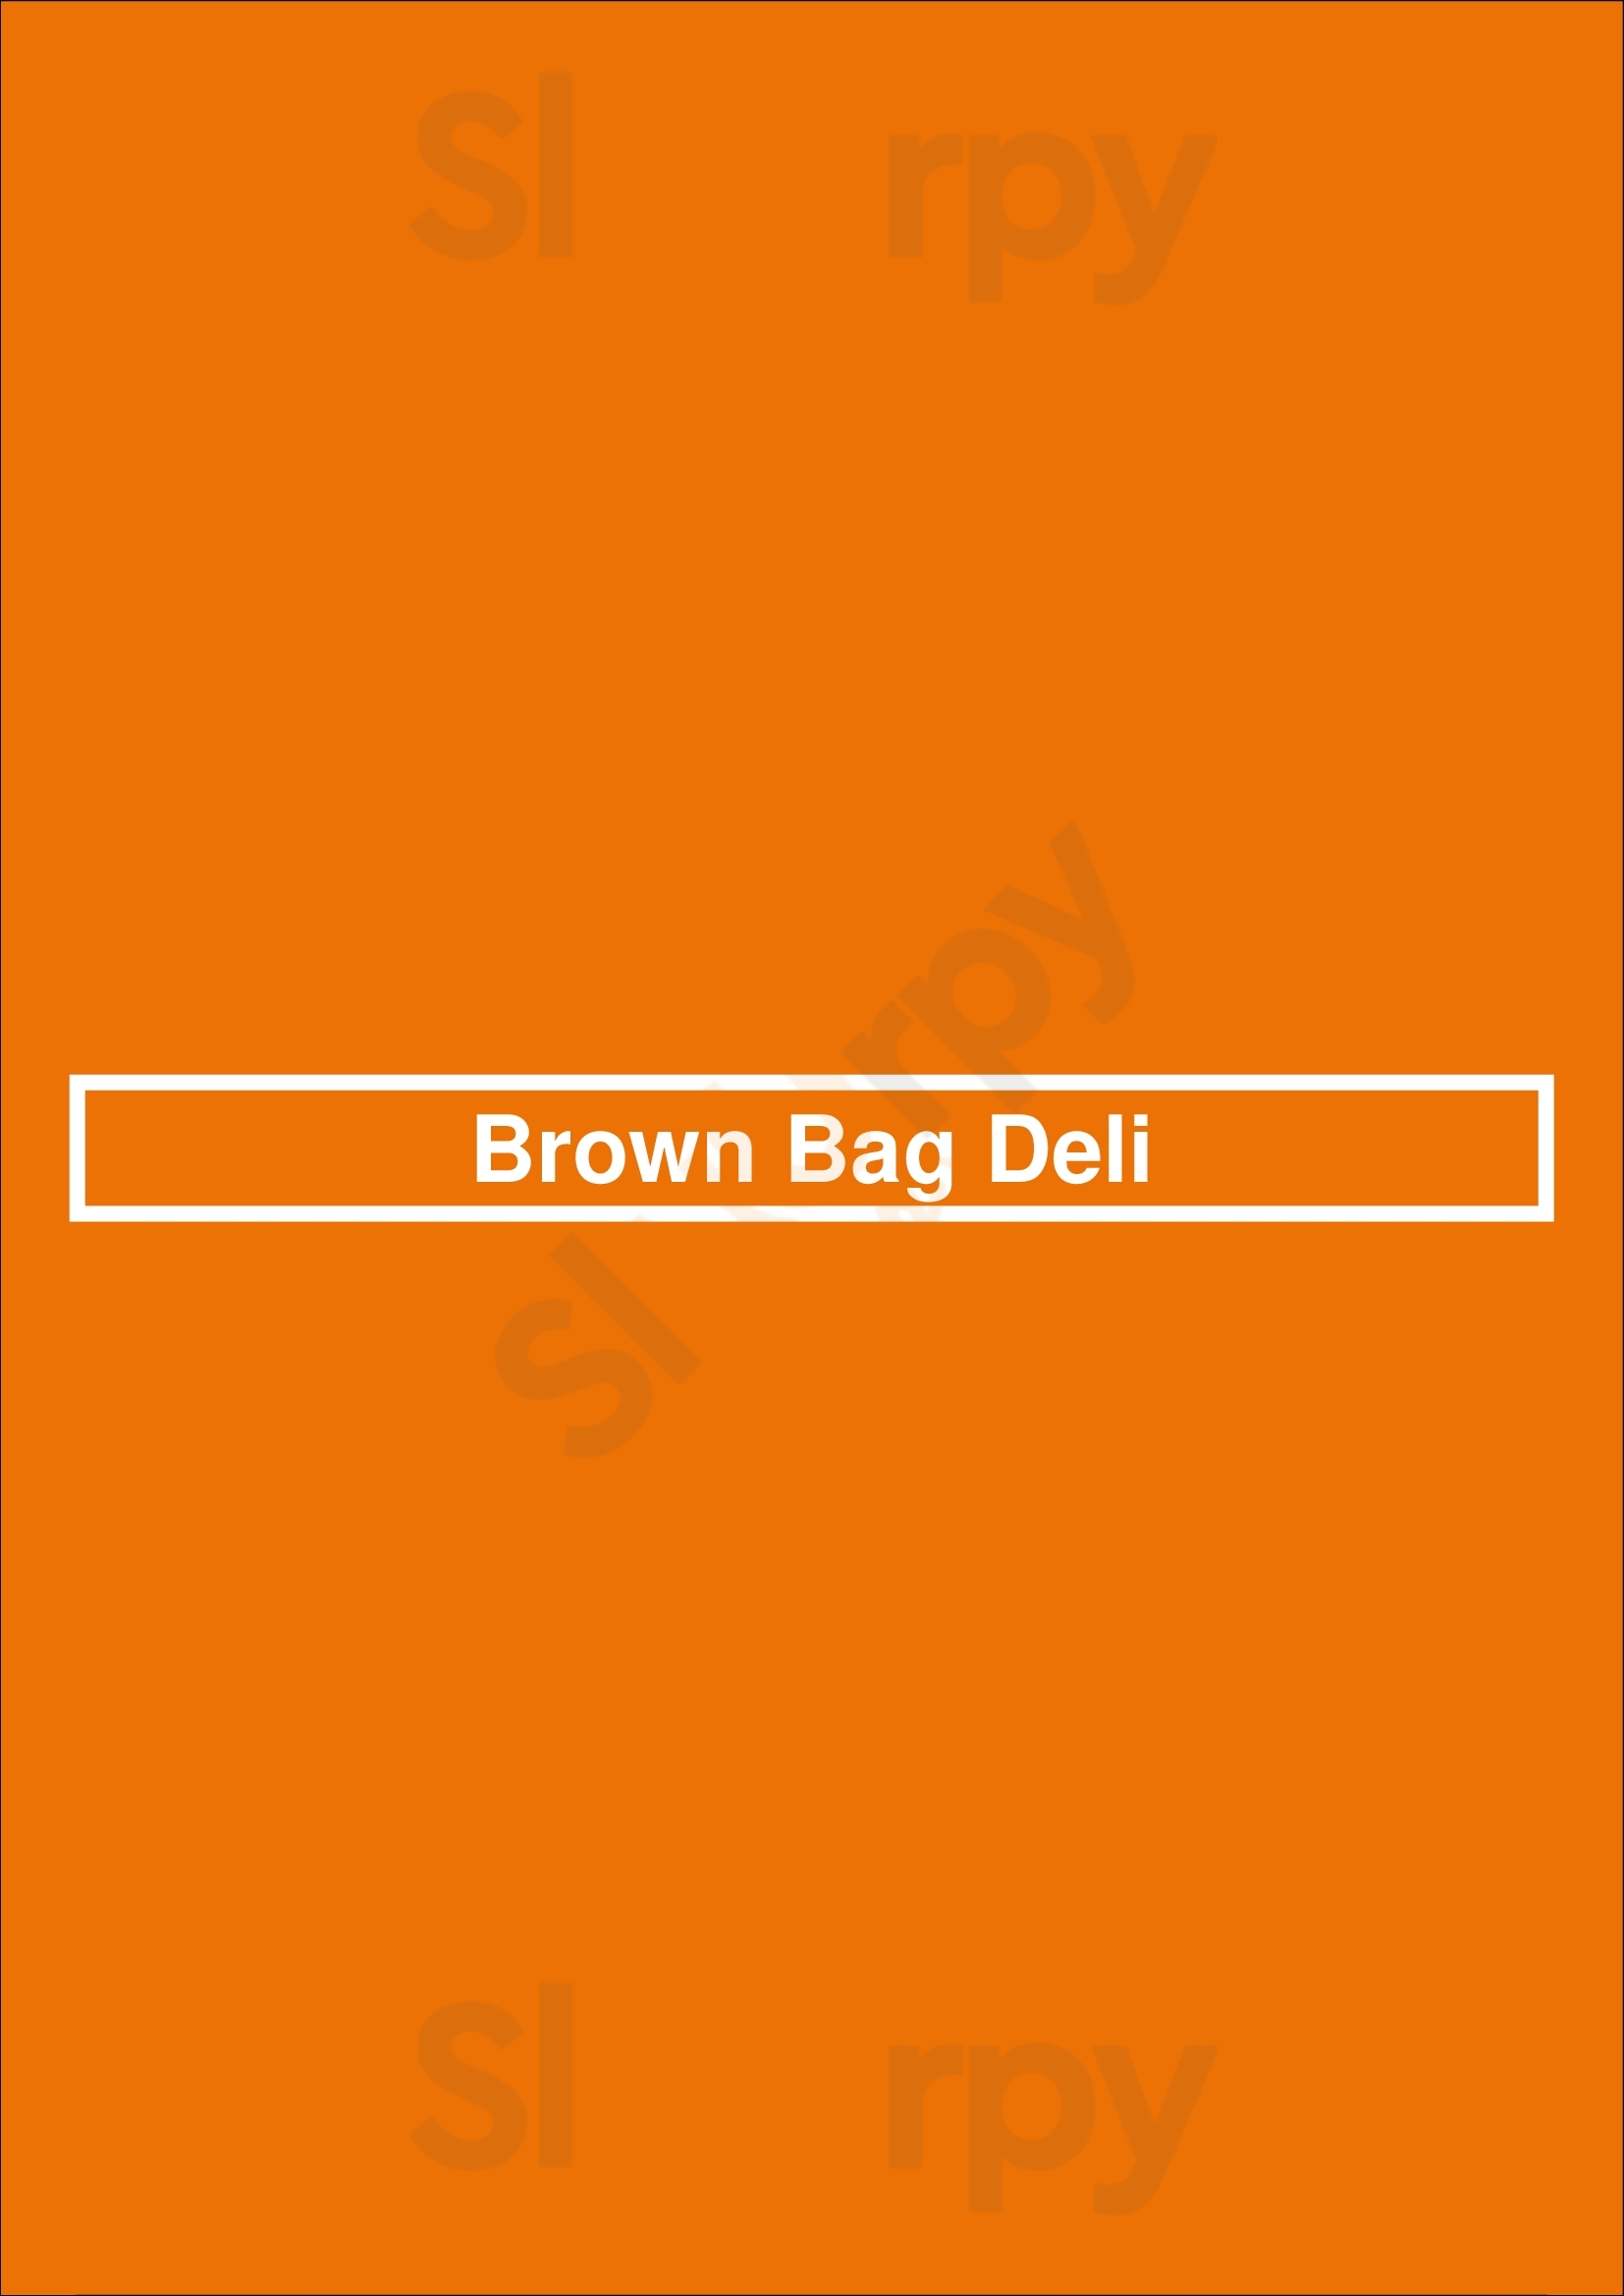 Brown Bag Deli Houston Menu - 1